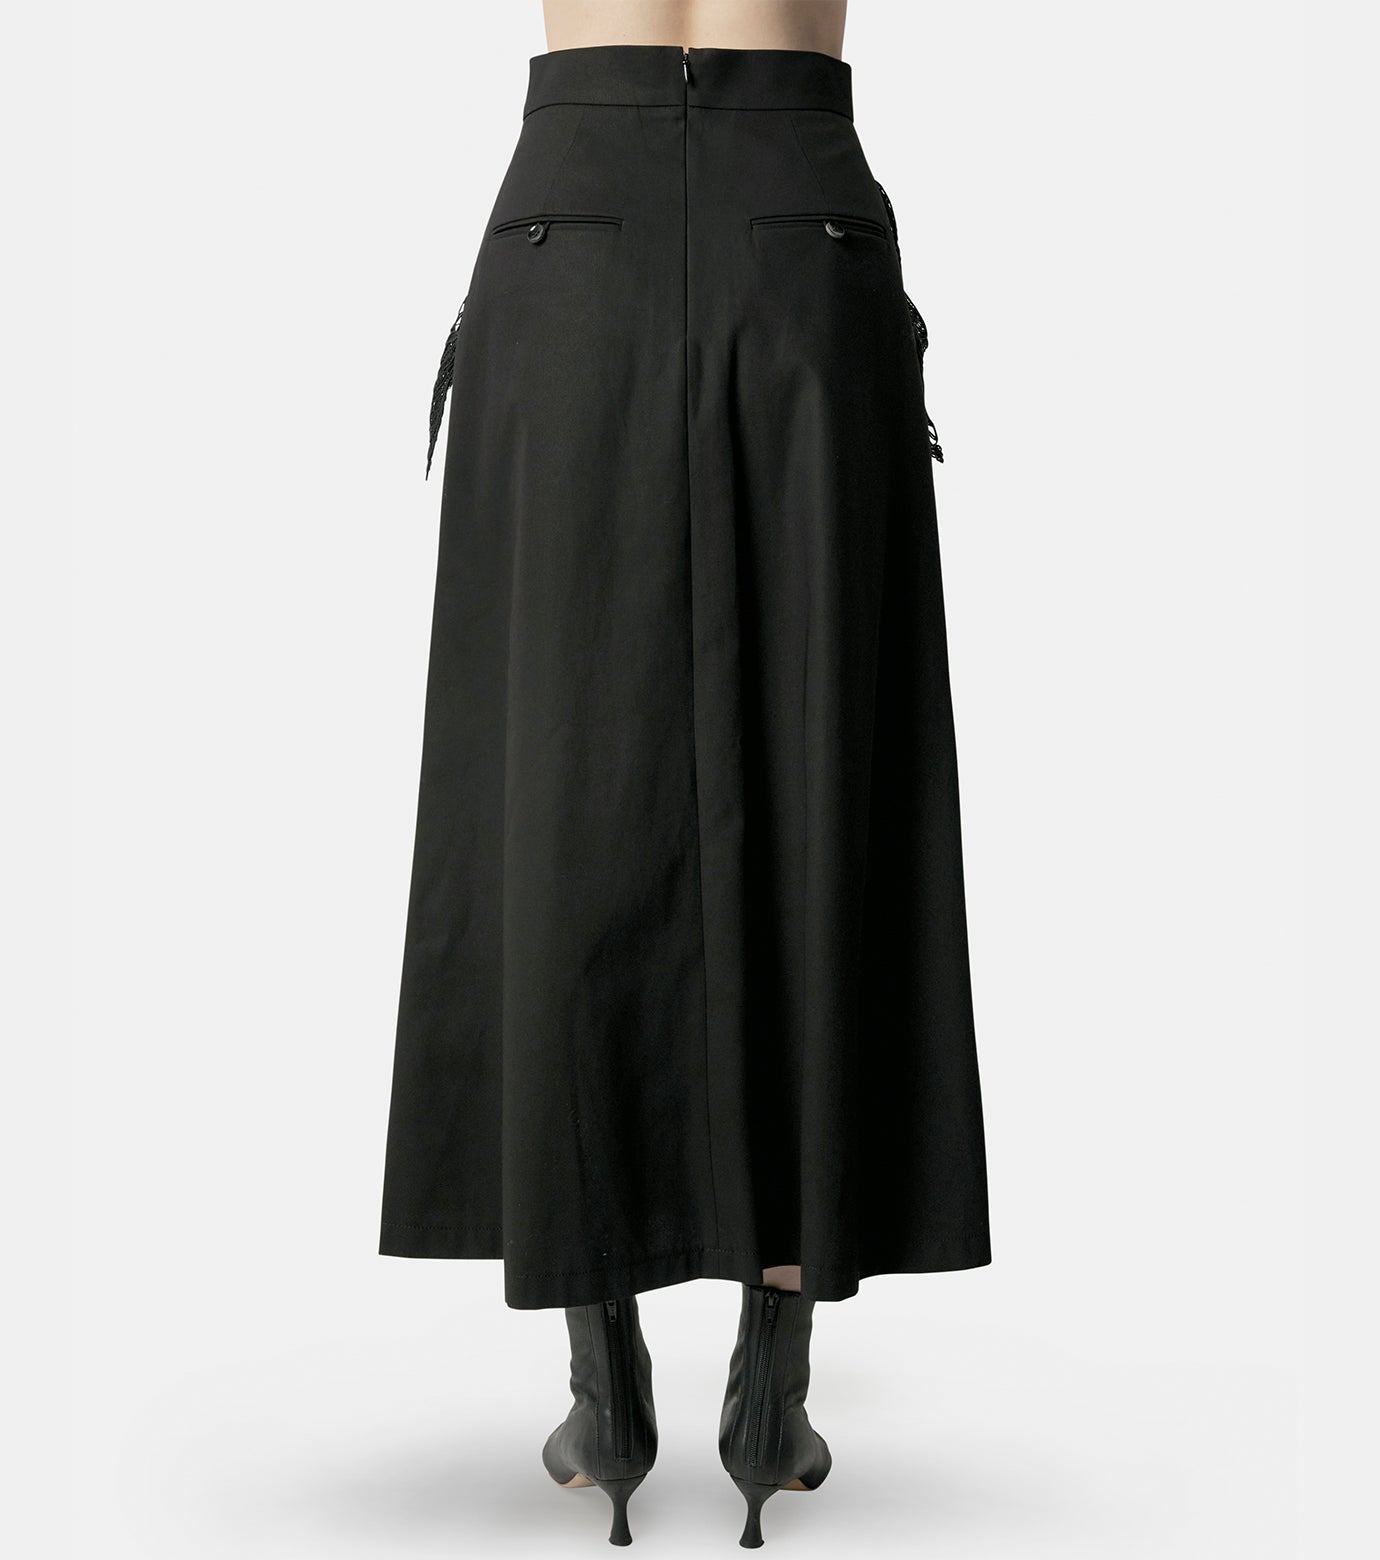 Cording Emb Detail Cotton Skirt